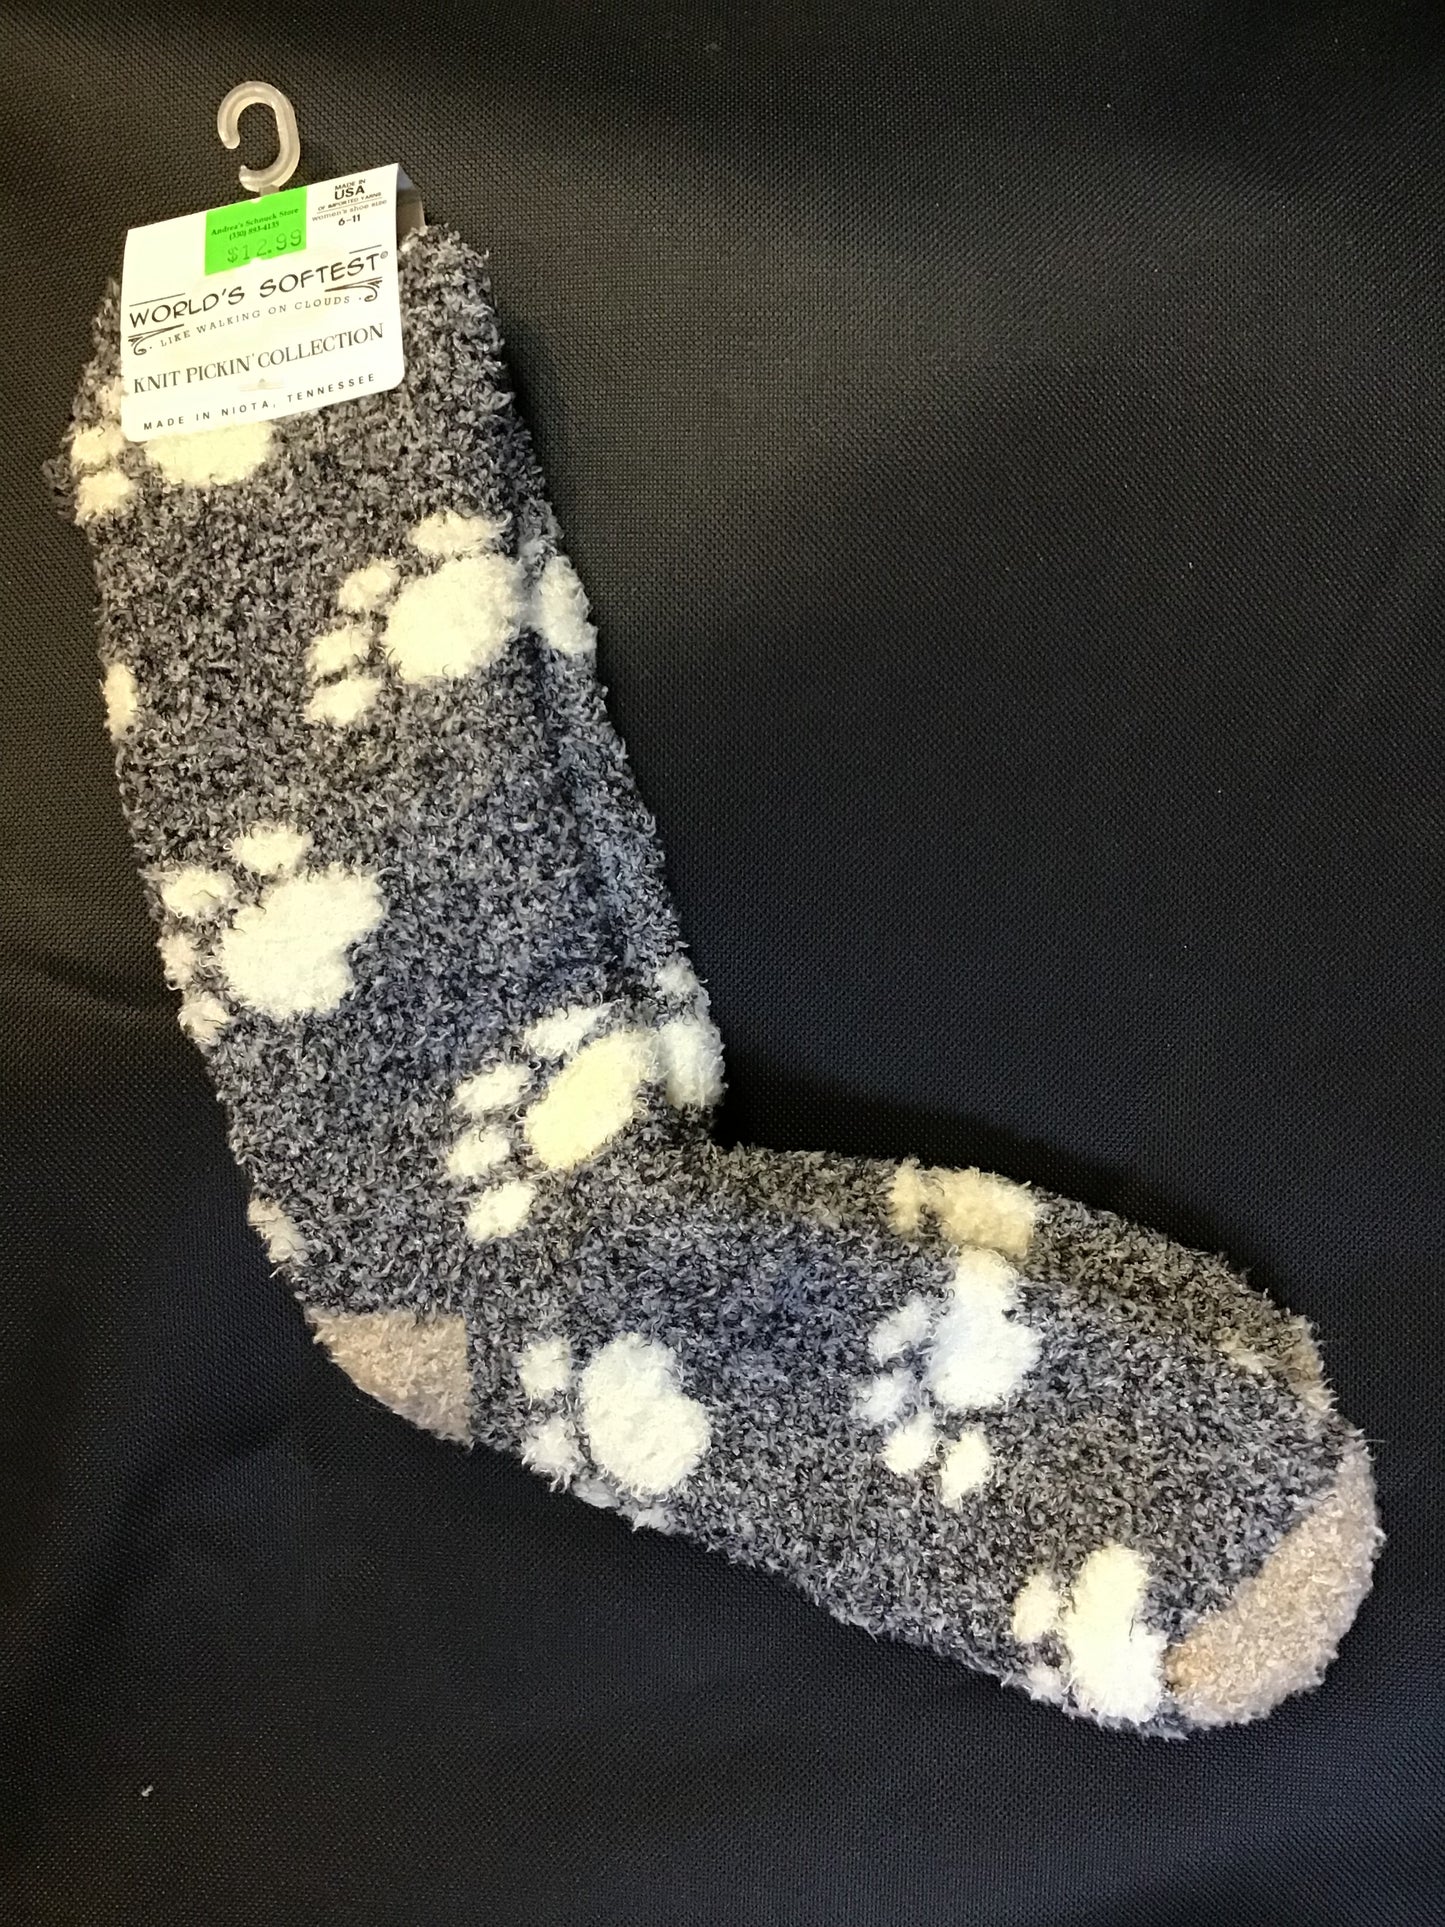 World's Softest Knit Pickin' Collection Crew Socks